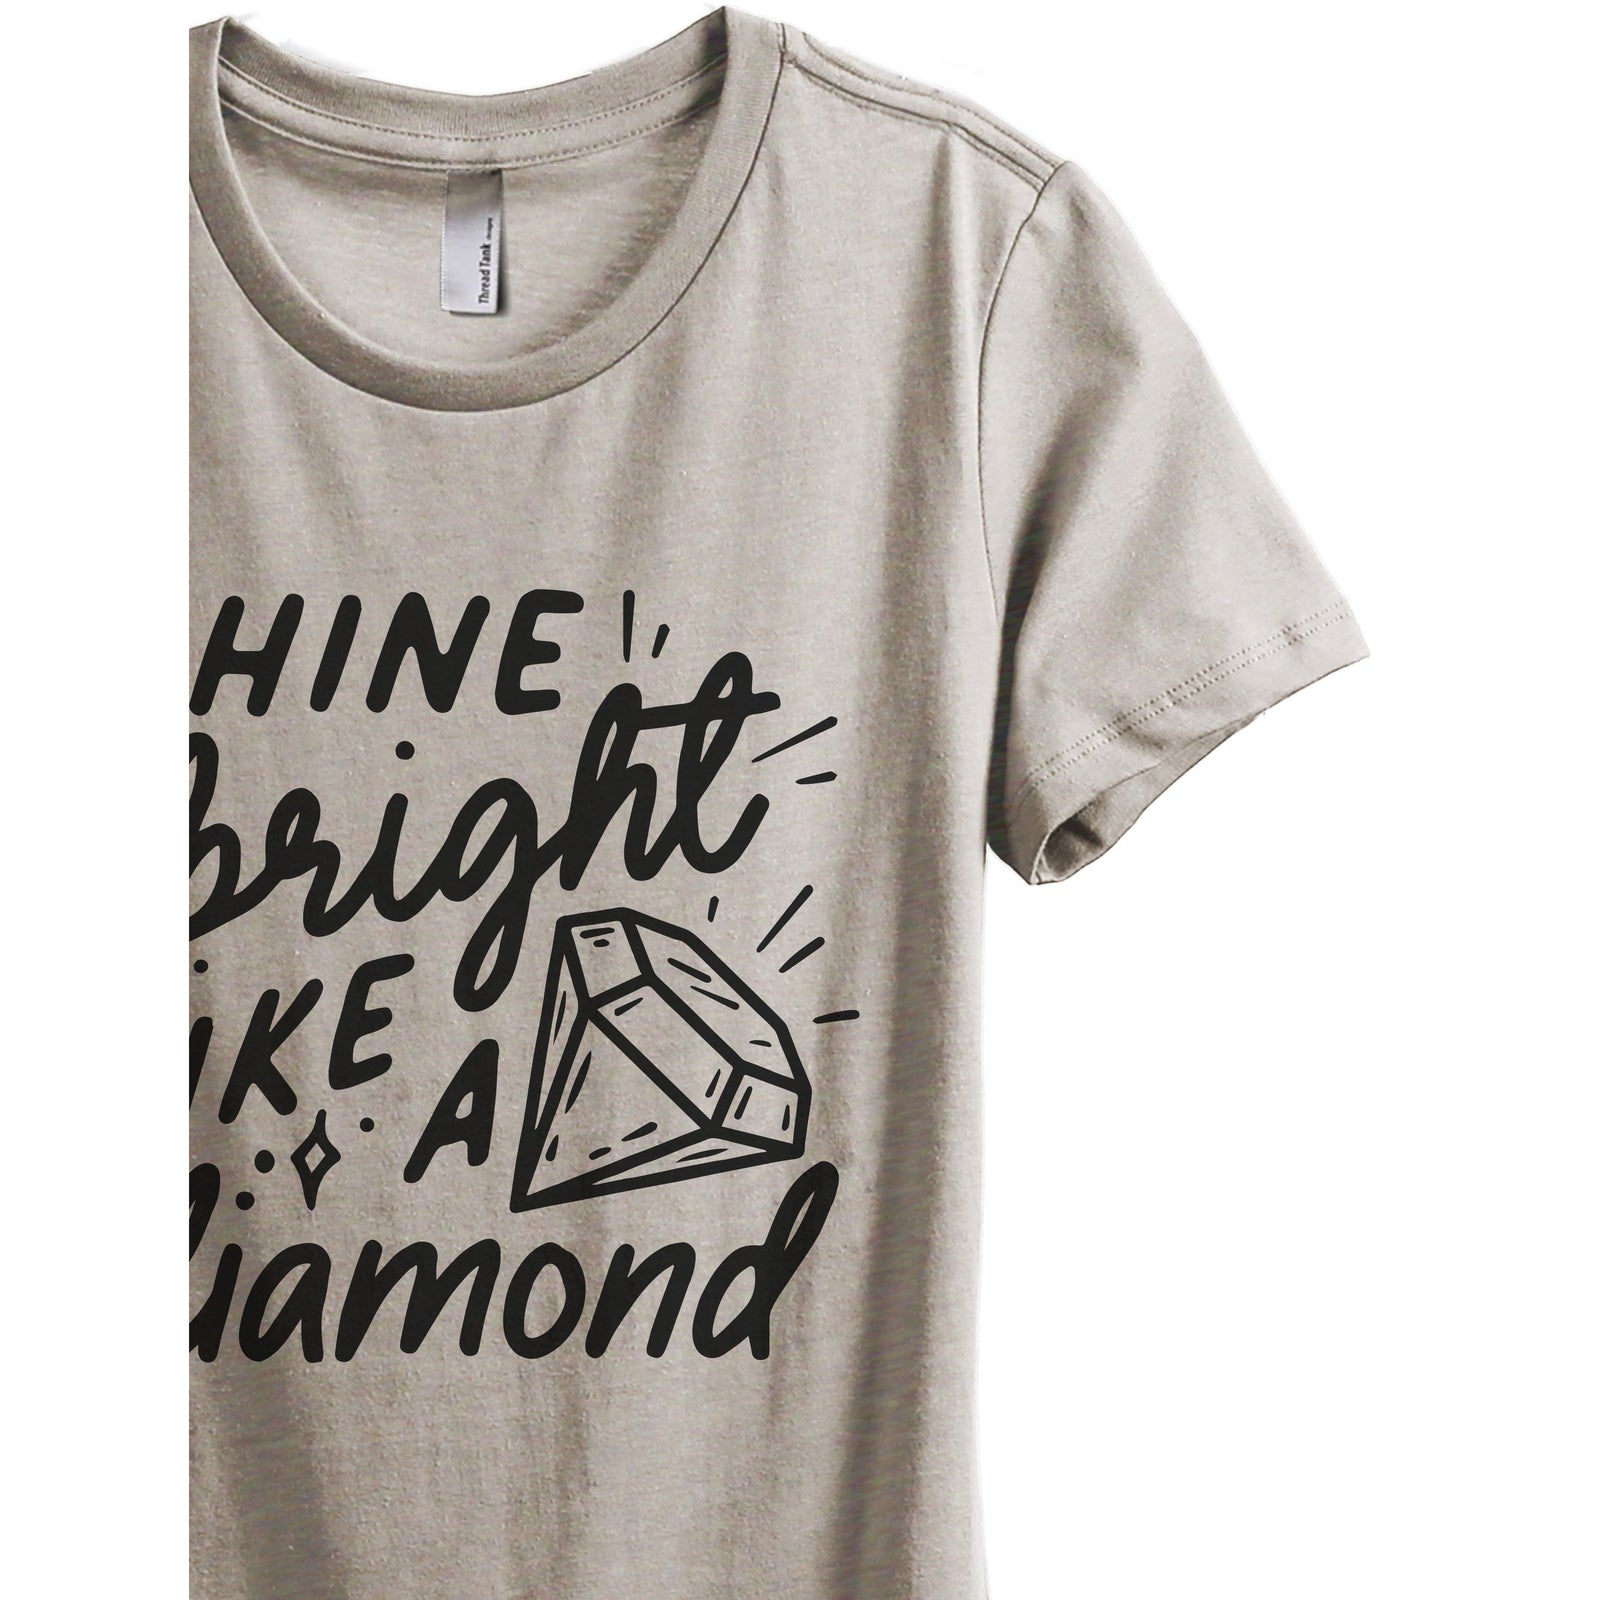 Shine bright like a Diamond – Uwi Twins Fashion Label Inc.